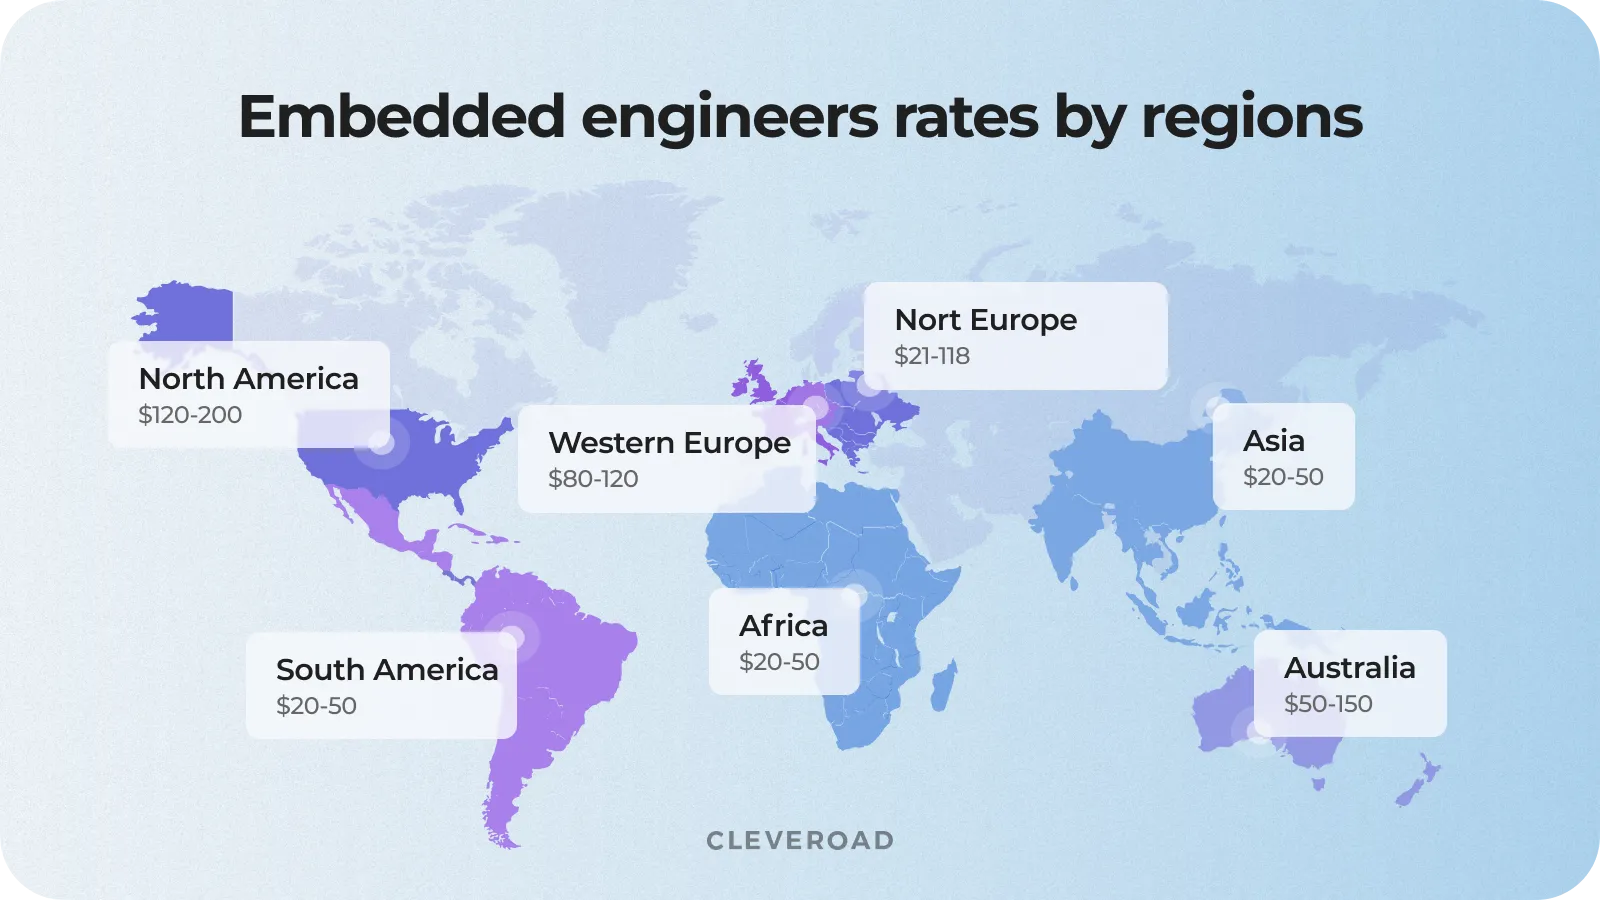 Global rates of embedded engineers